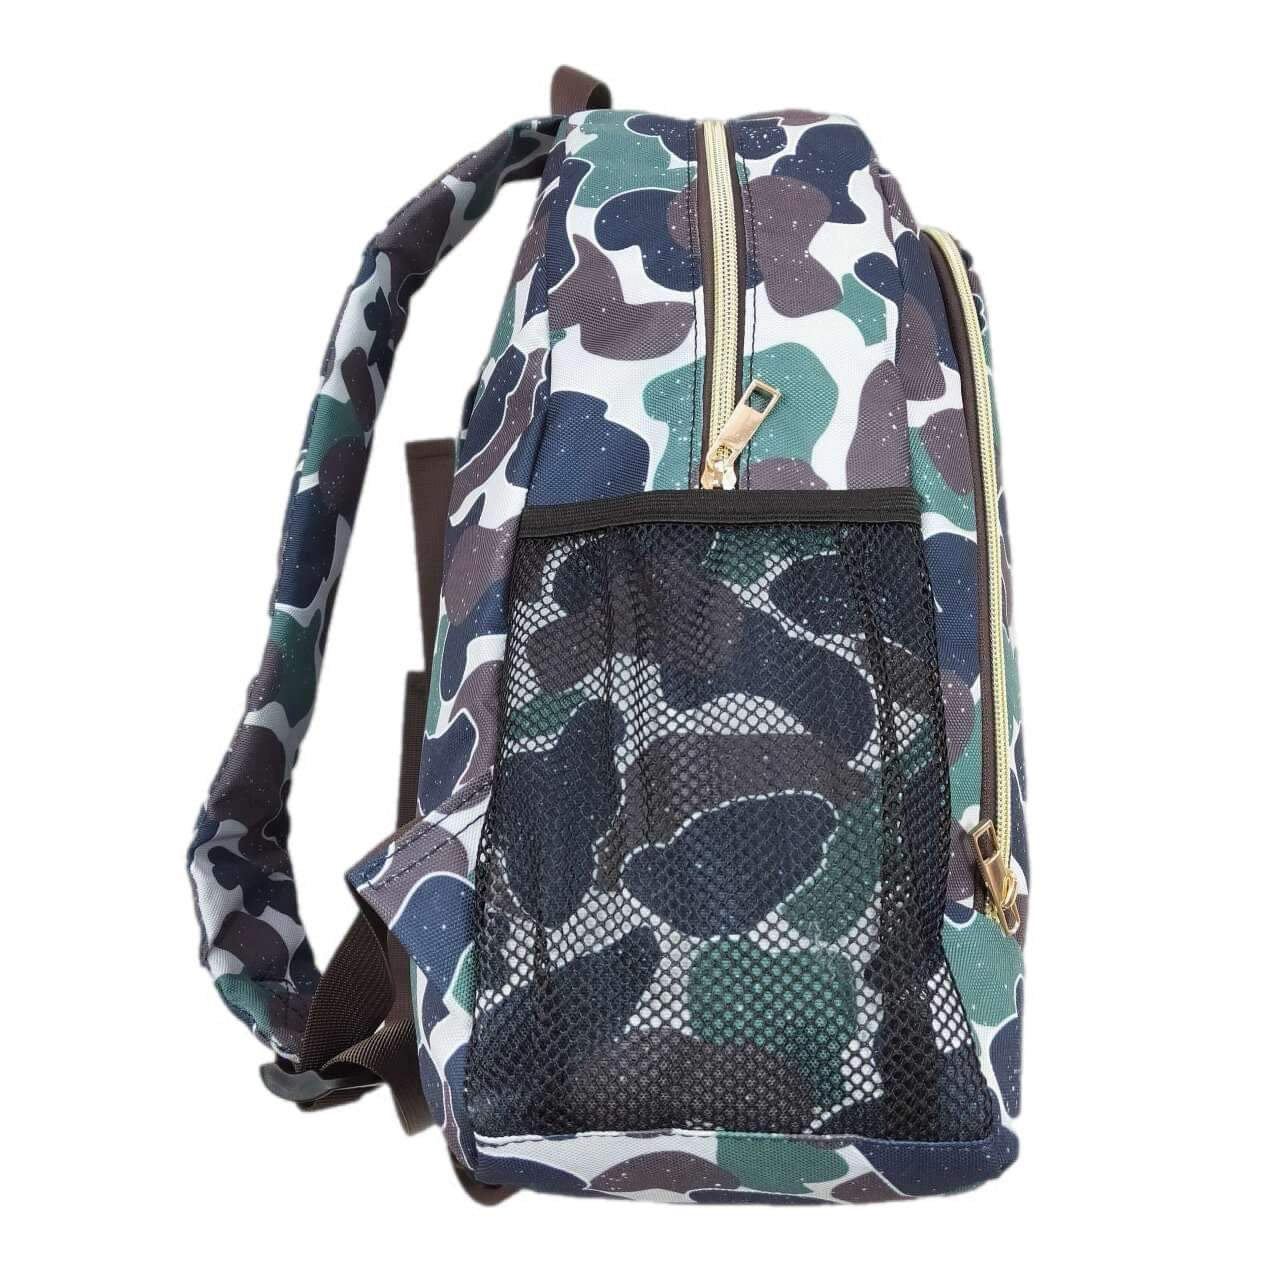 ᴡᴇᴇᴋʟʏ ᴘʀᴇ ᴏʀᴅᴇʀ Backpack- Camo 10x14x4